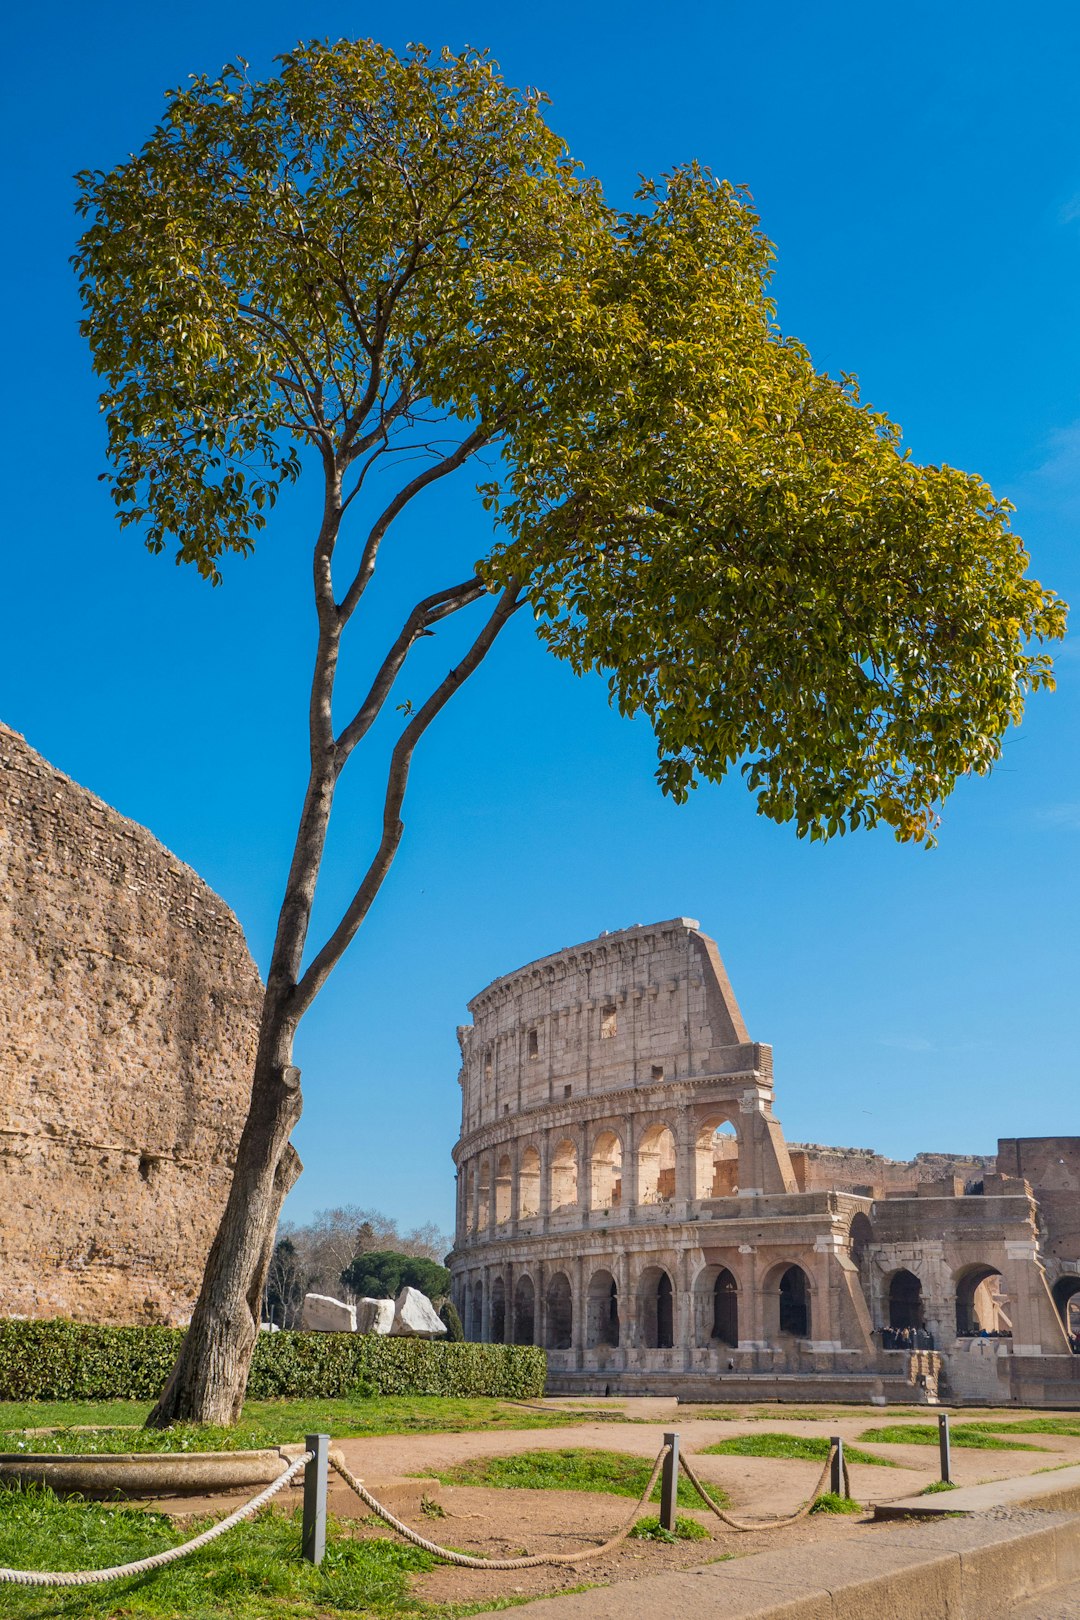 Landmark photo spot Colosseum Trevi Fountain